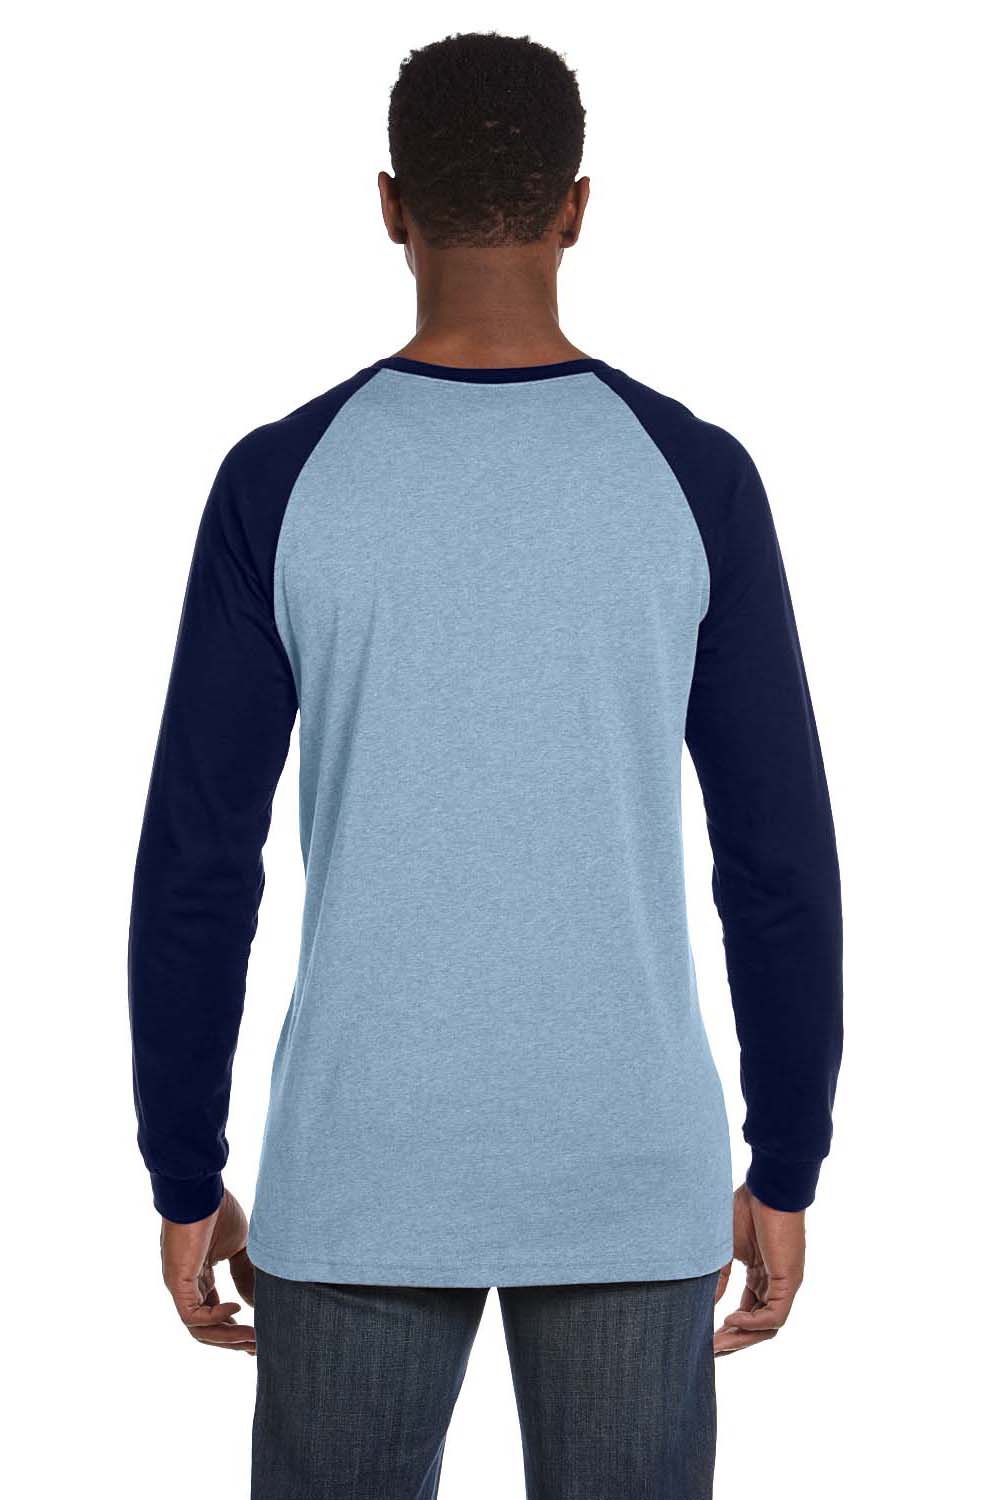 Bella + Canvas 3000C Mens Jersey Long Sleeve Crewneck T-Shirt Baby Blue/Navy Blue Back